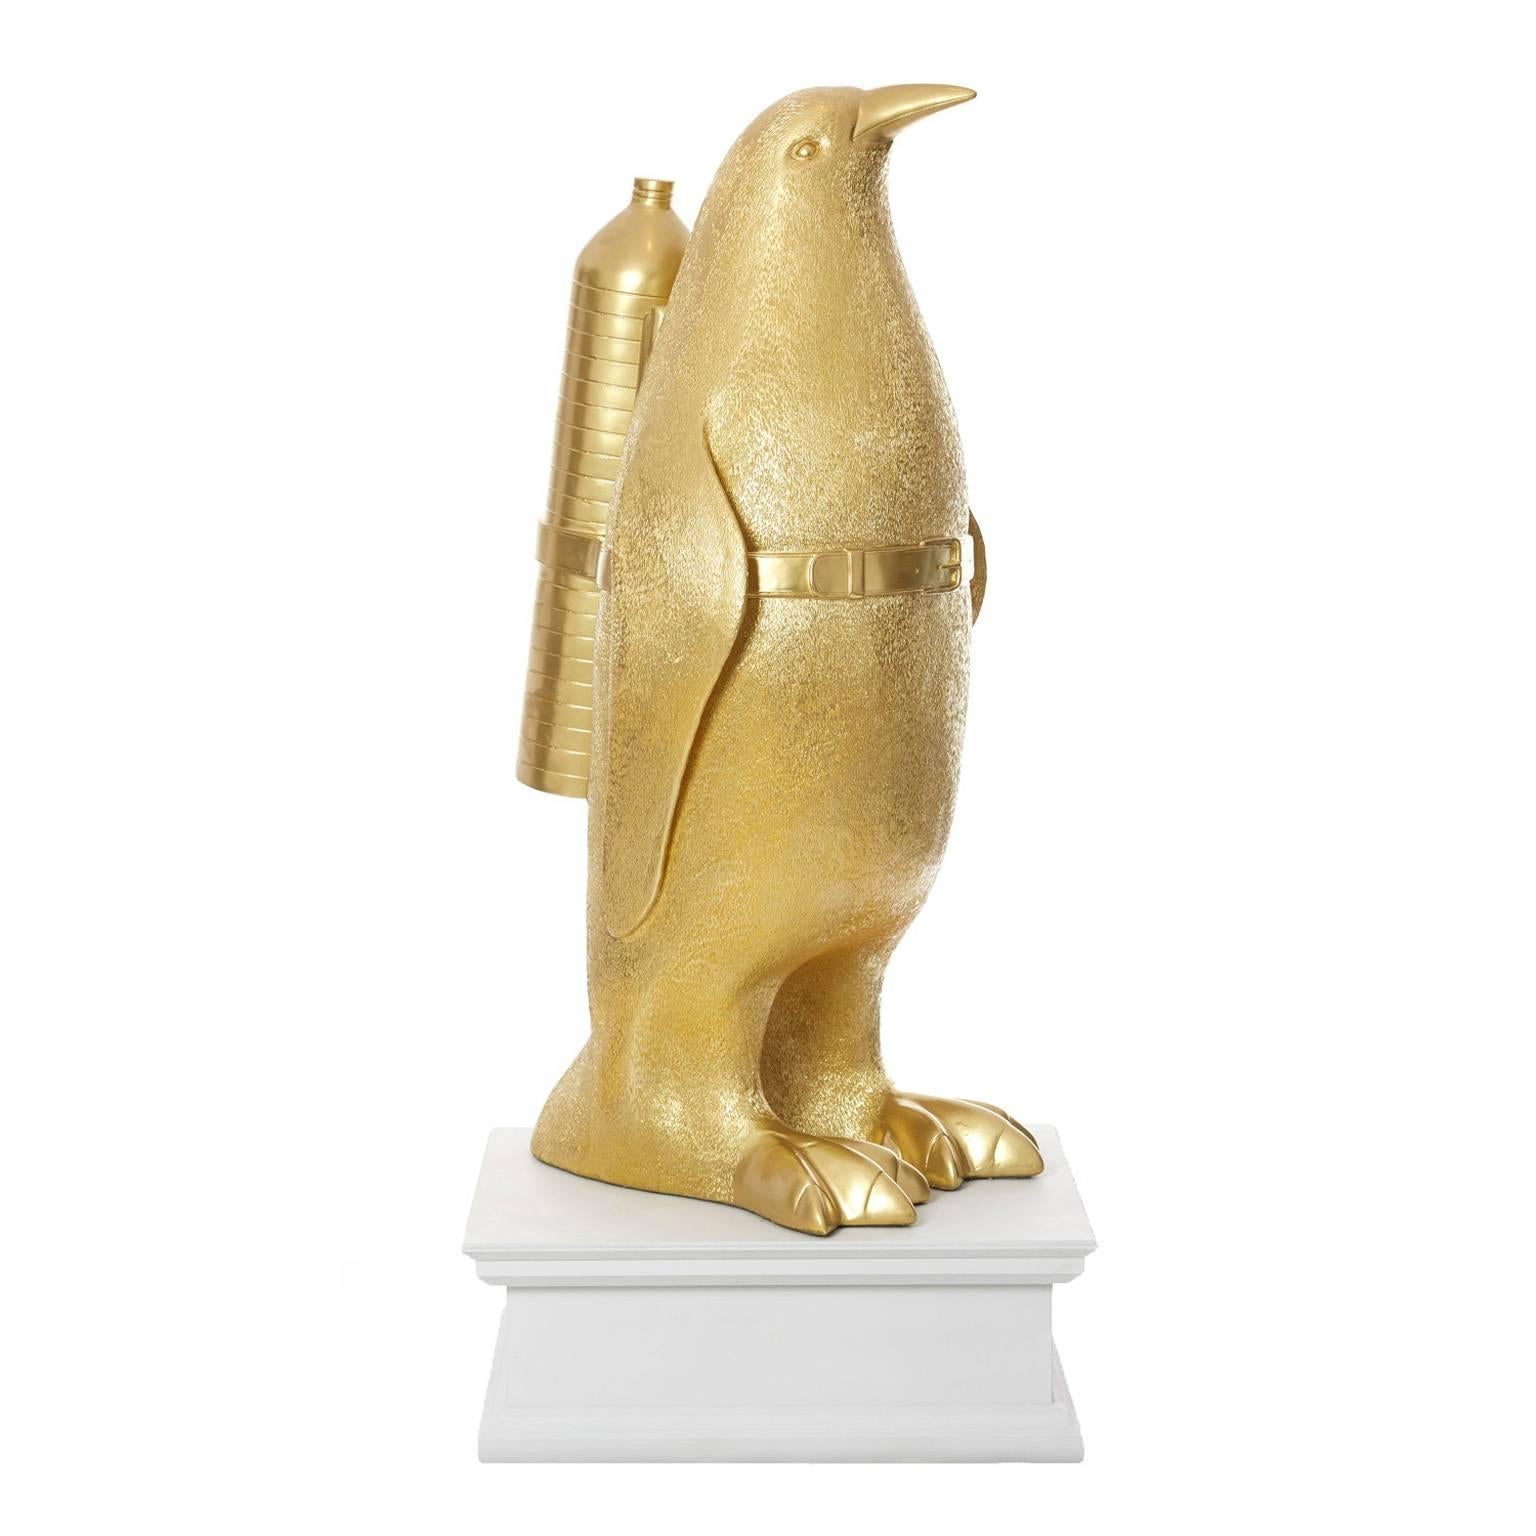 William Sweetlove Figurative Sculpture - Cloned gold Penguin with pet bottles 